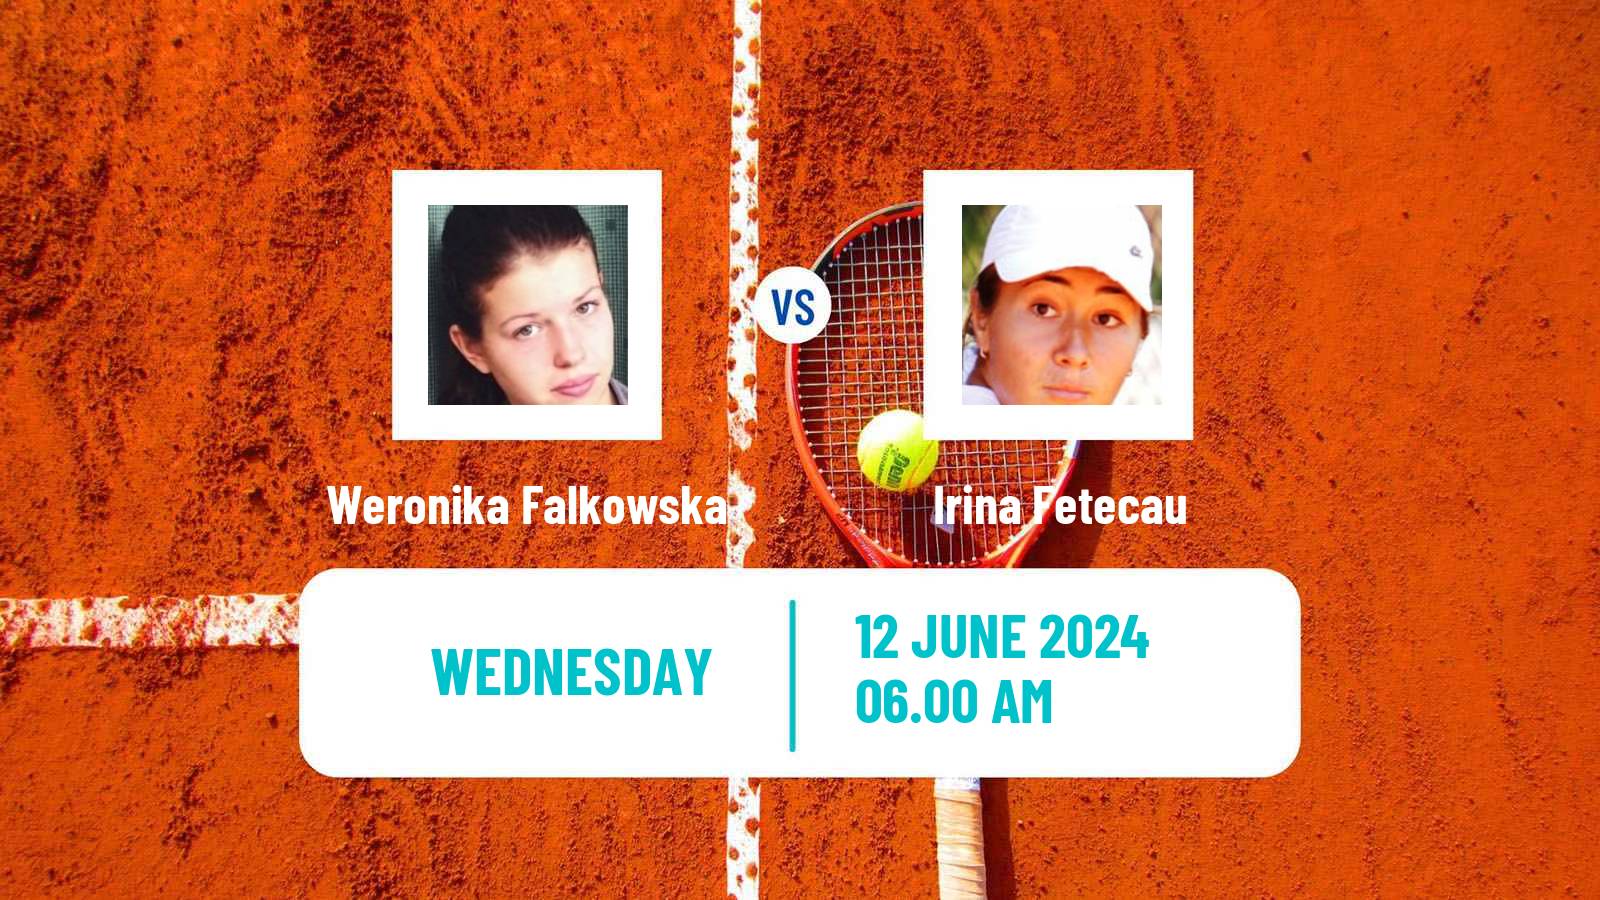 Tennis ITF W35 Gdansk Women Weronika Falkowska - Irina Fetecau